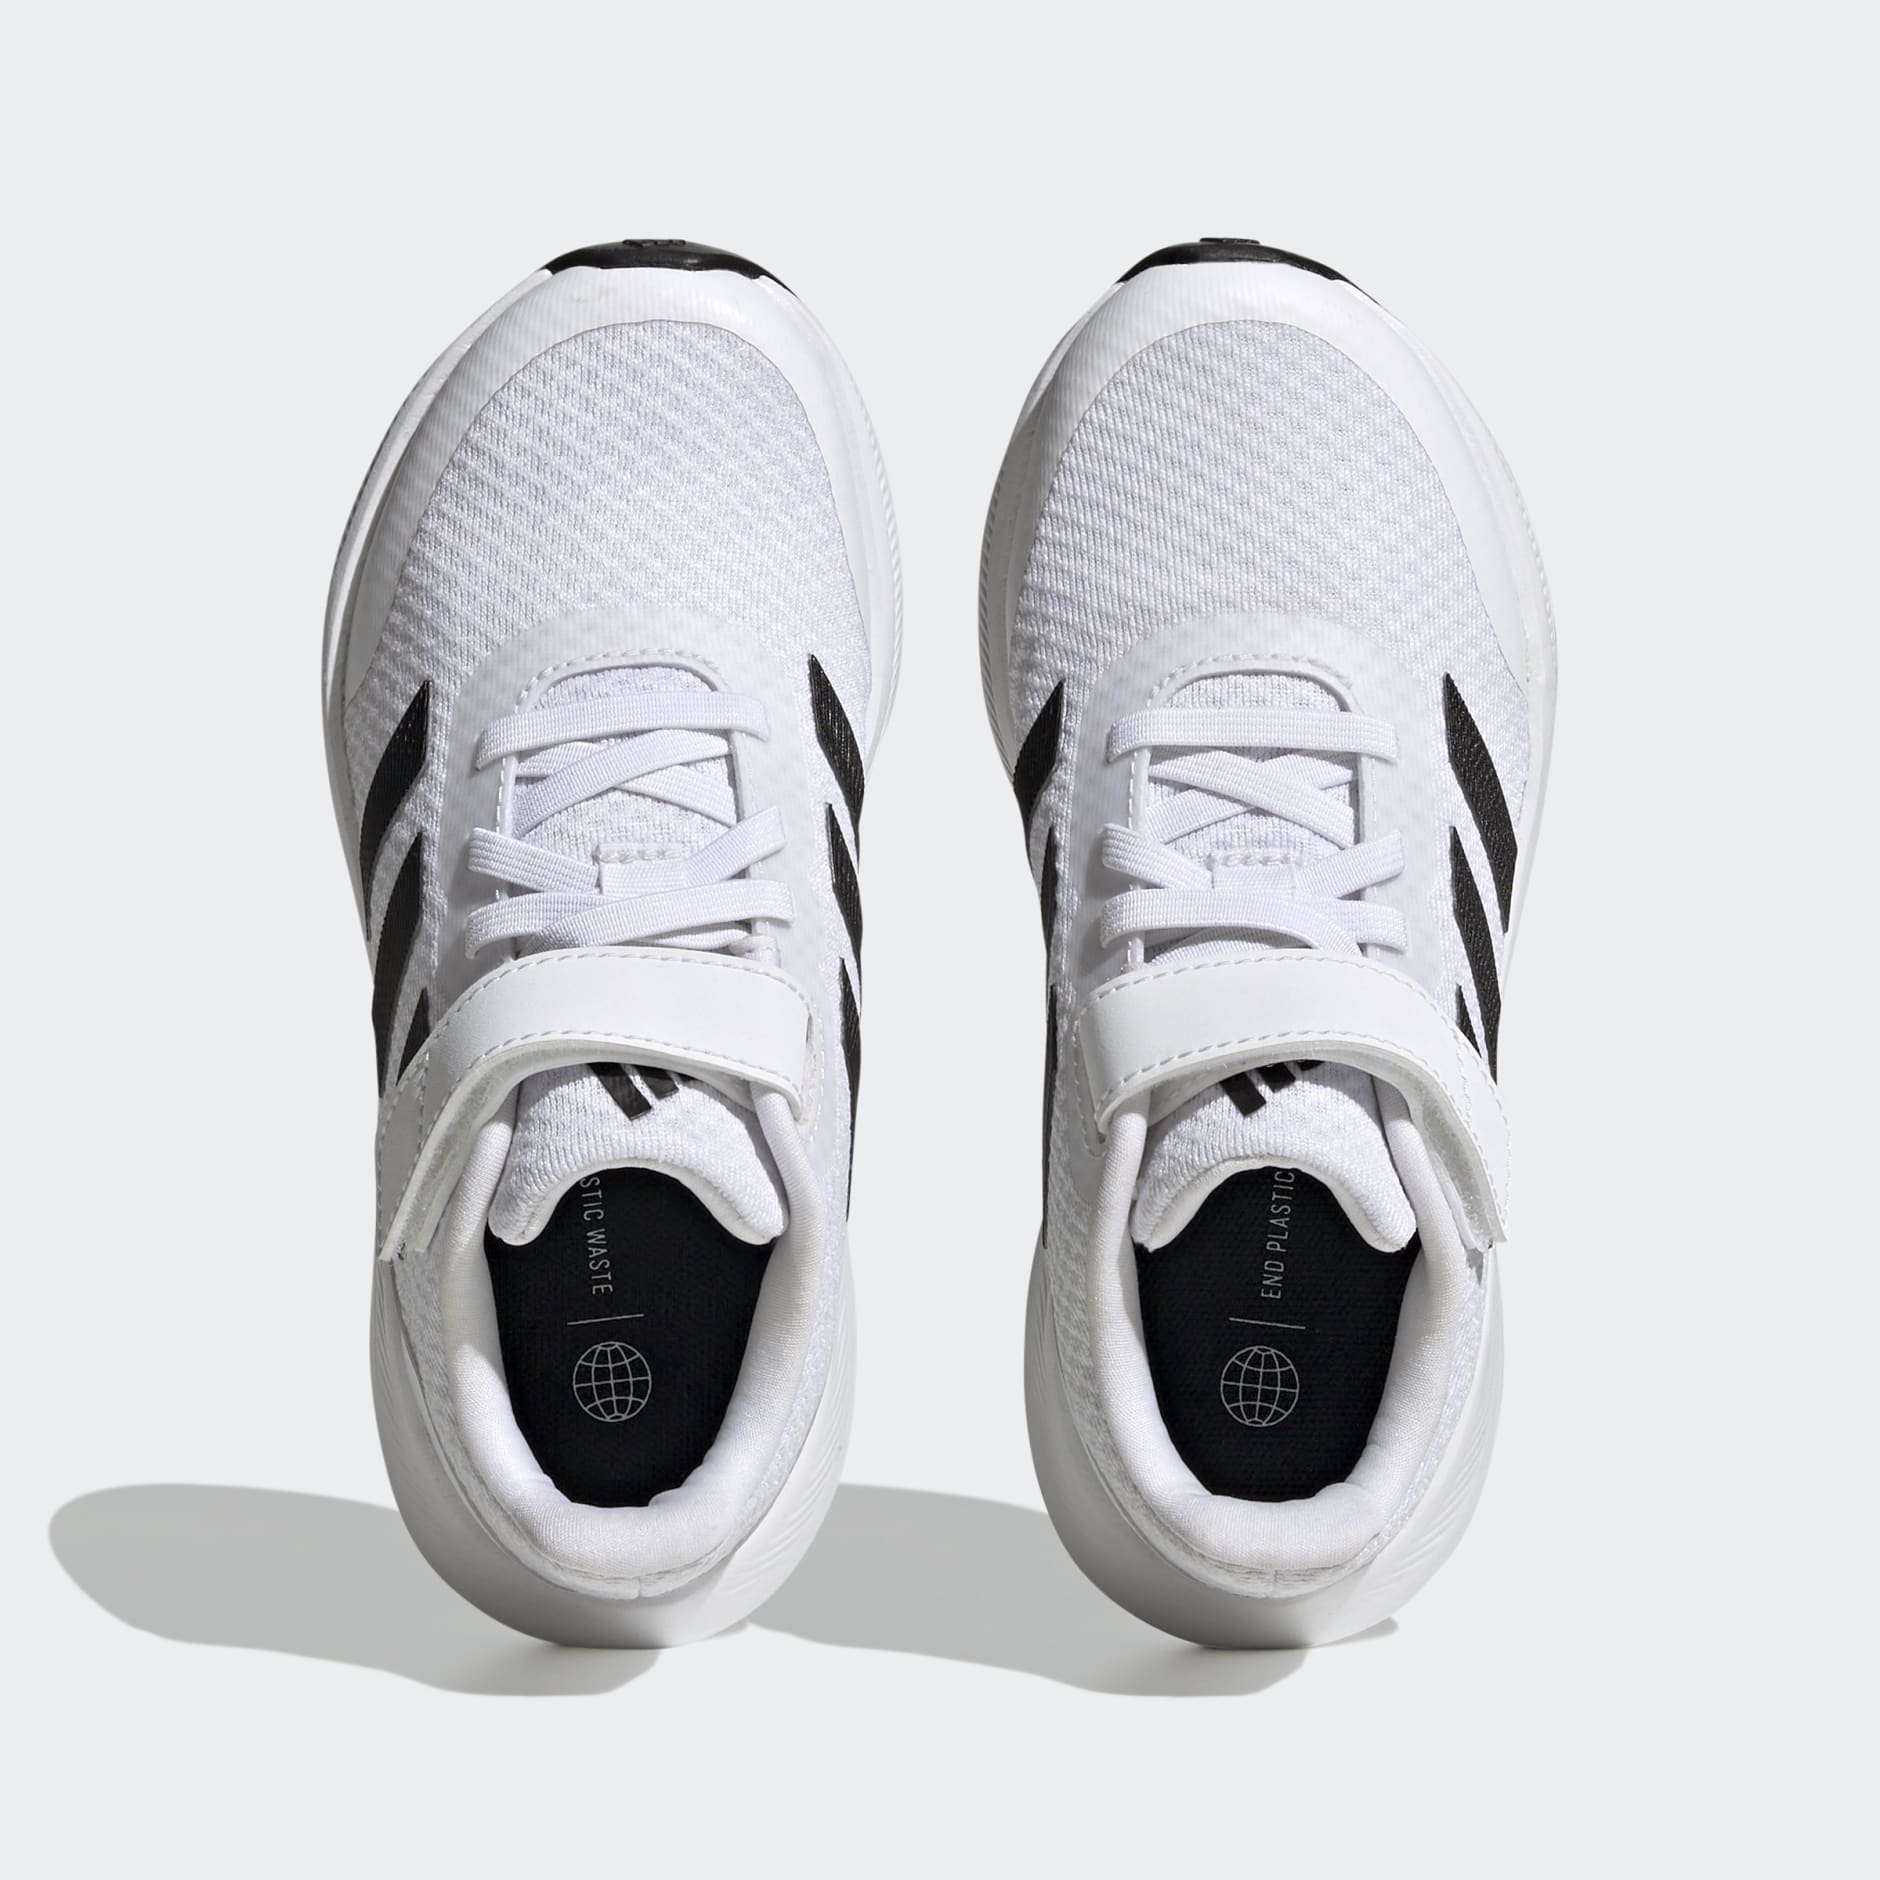 Kids Shoes Oman White - adidas Elastic RunFalcon Shoes - 3.0 Lace | Top Strap